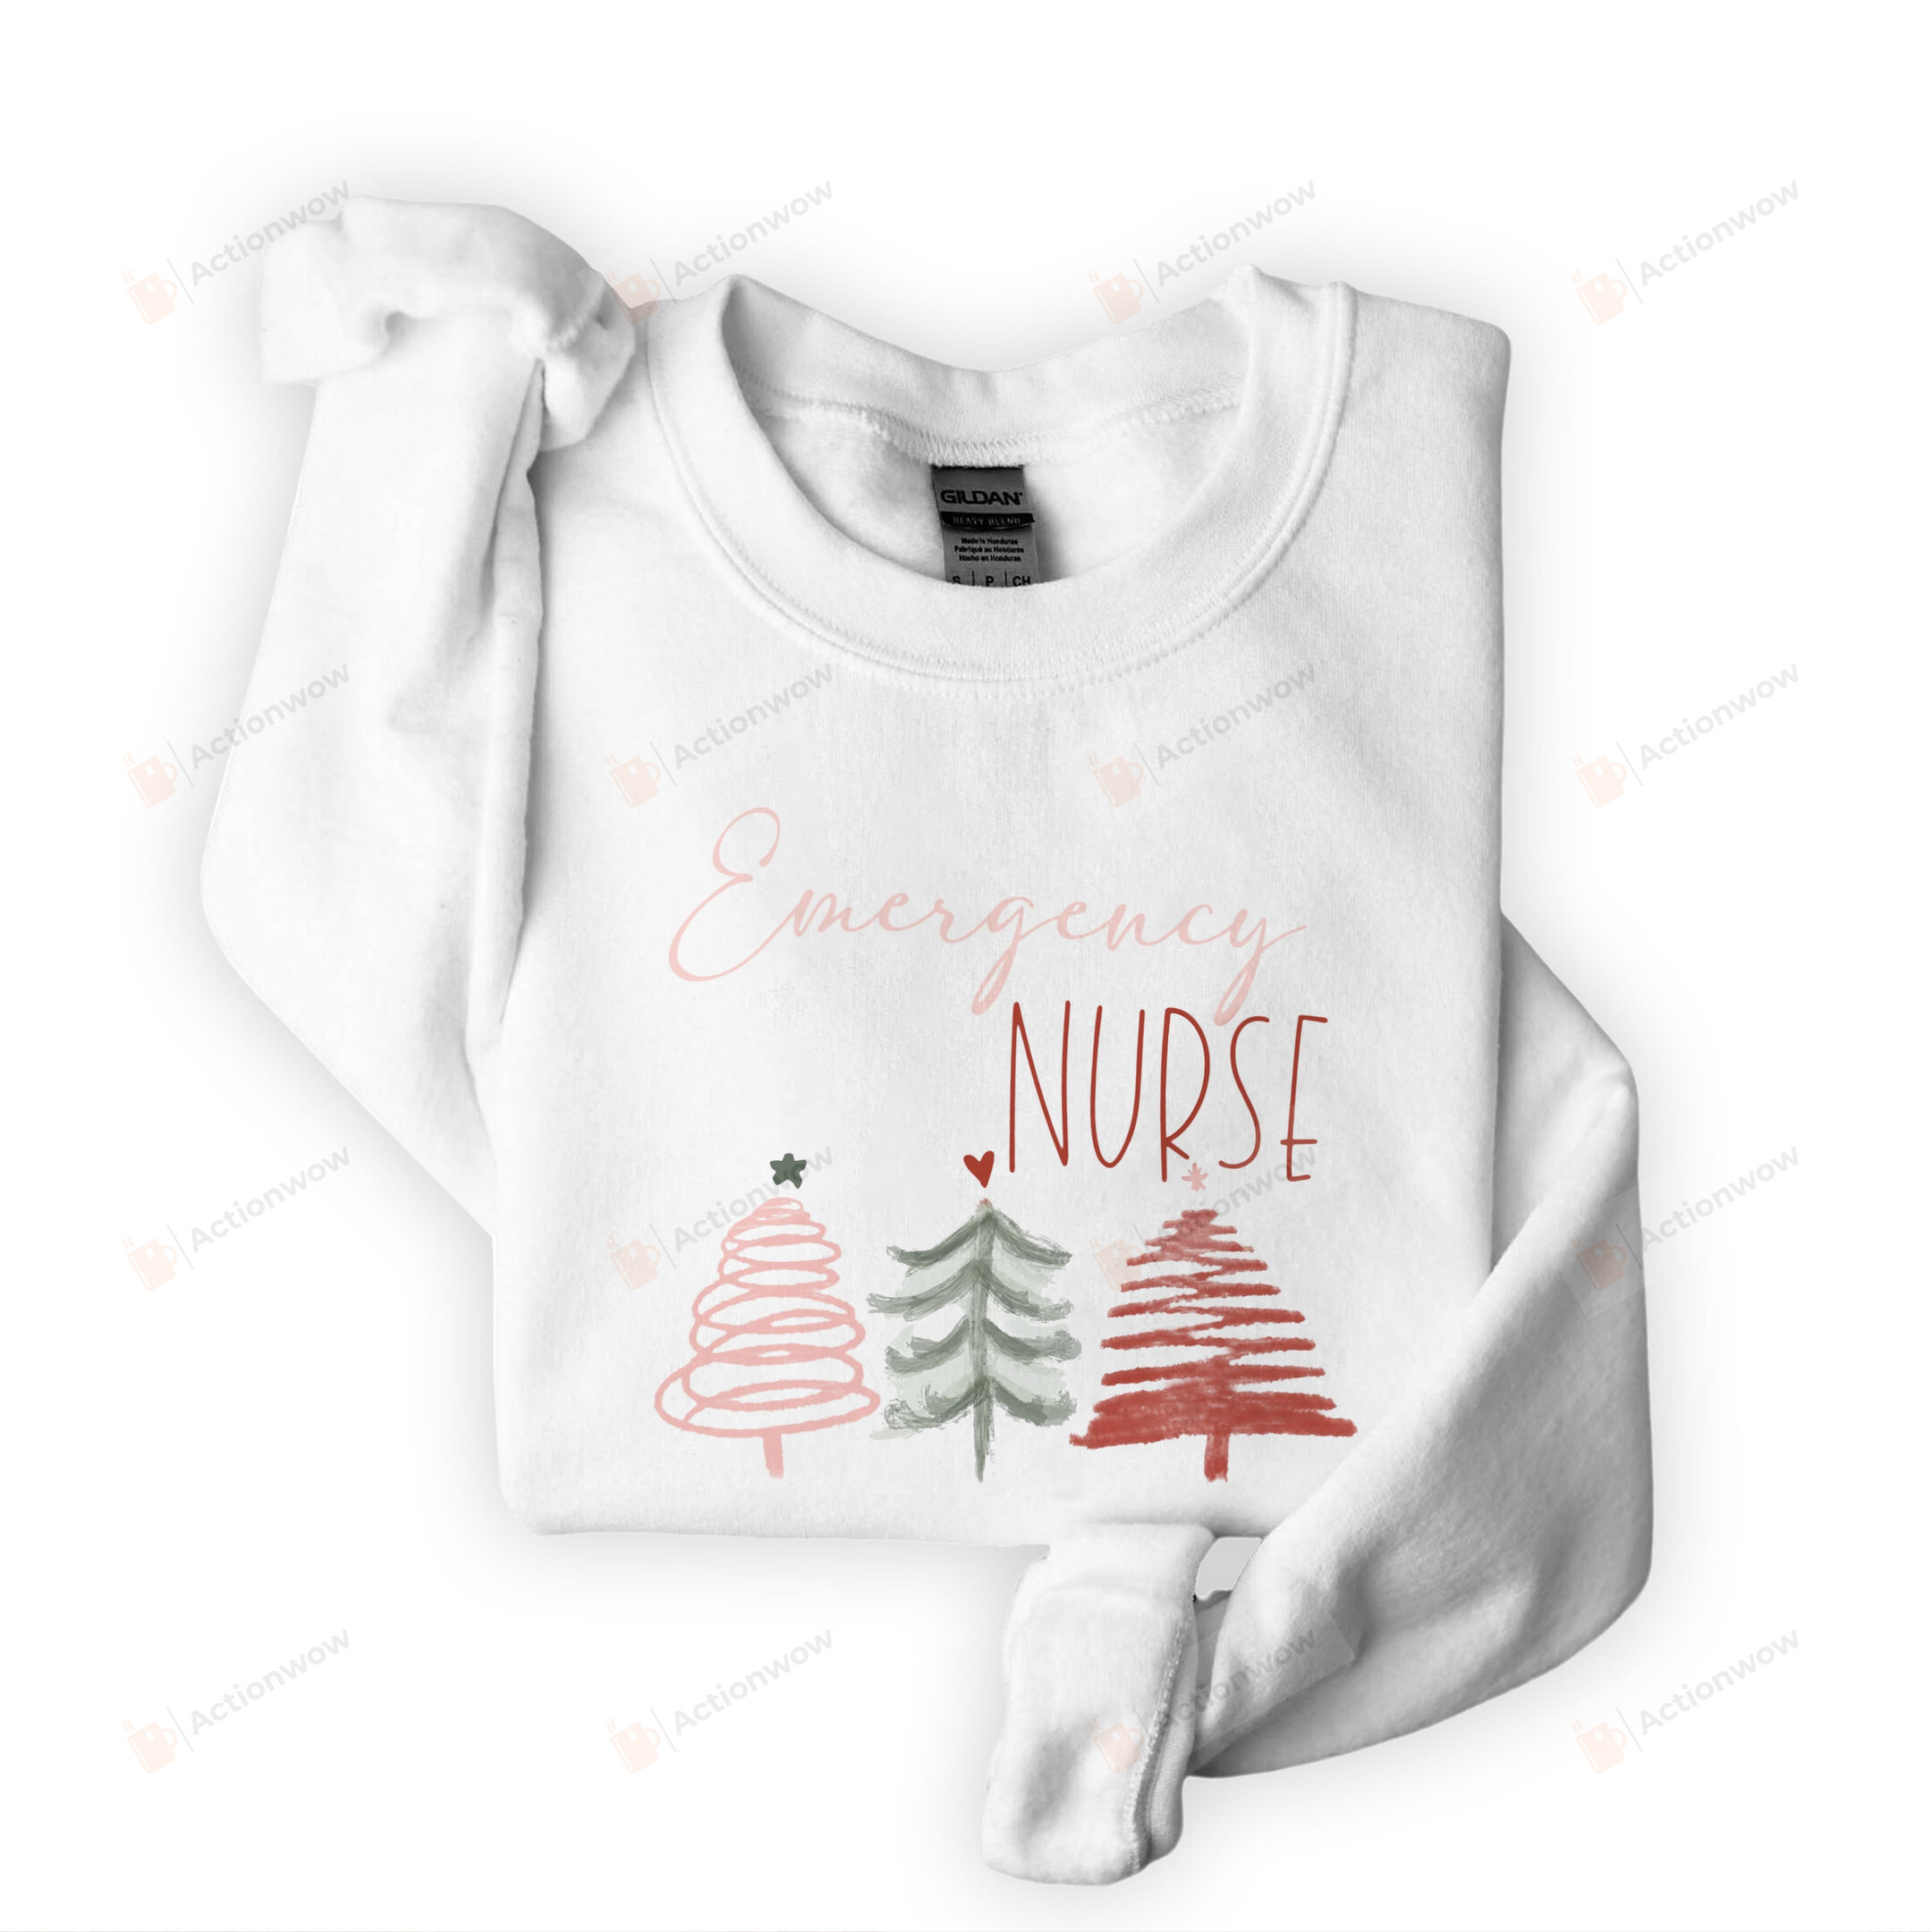 Emergency Nurse Sweatshirt Tshirt Hoodie, Gifts For Nurse, Lp Lpn Nurse Gifts For Women, Christmas Shirt For Her